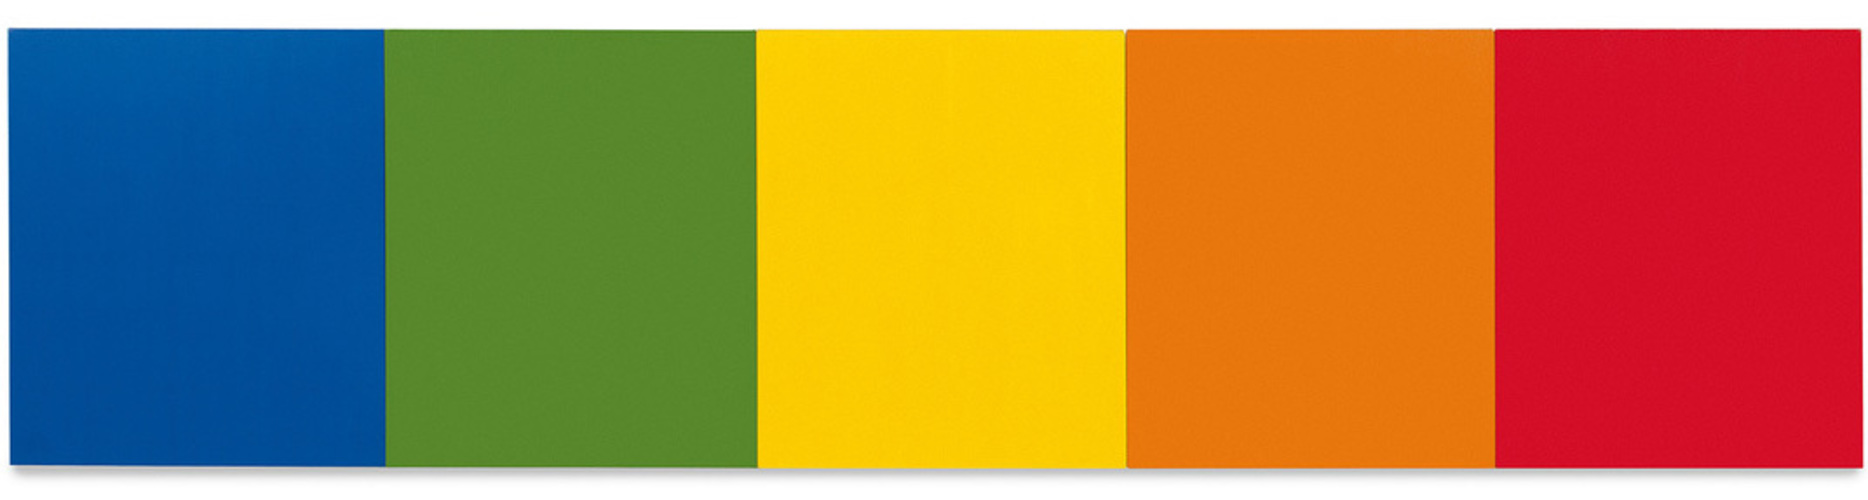 Ellsworth Kelly, Blue, Green, Yellow, Orange, Red, 1966